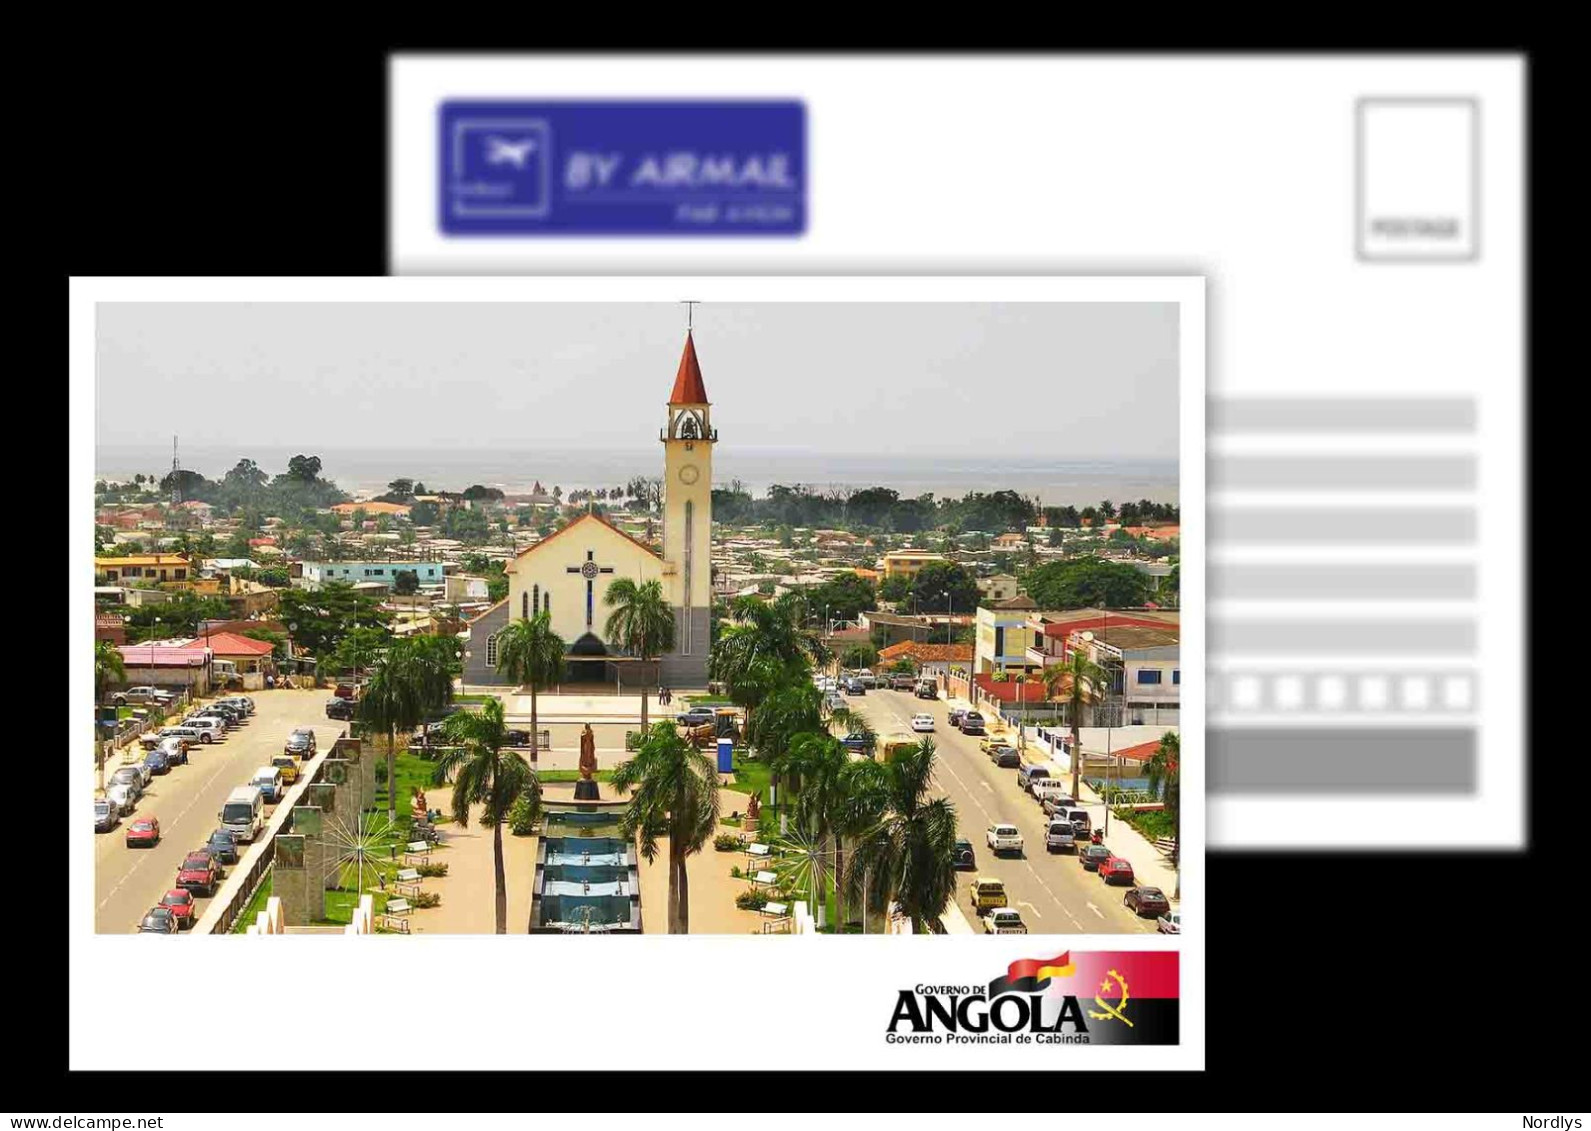 Angola / Cabinda / Postcard / View Card - Angola